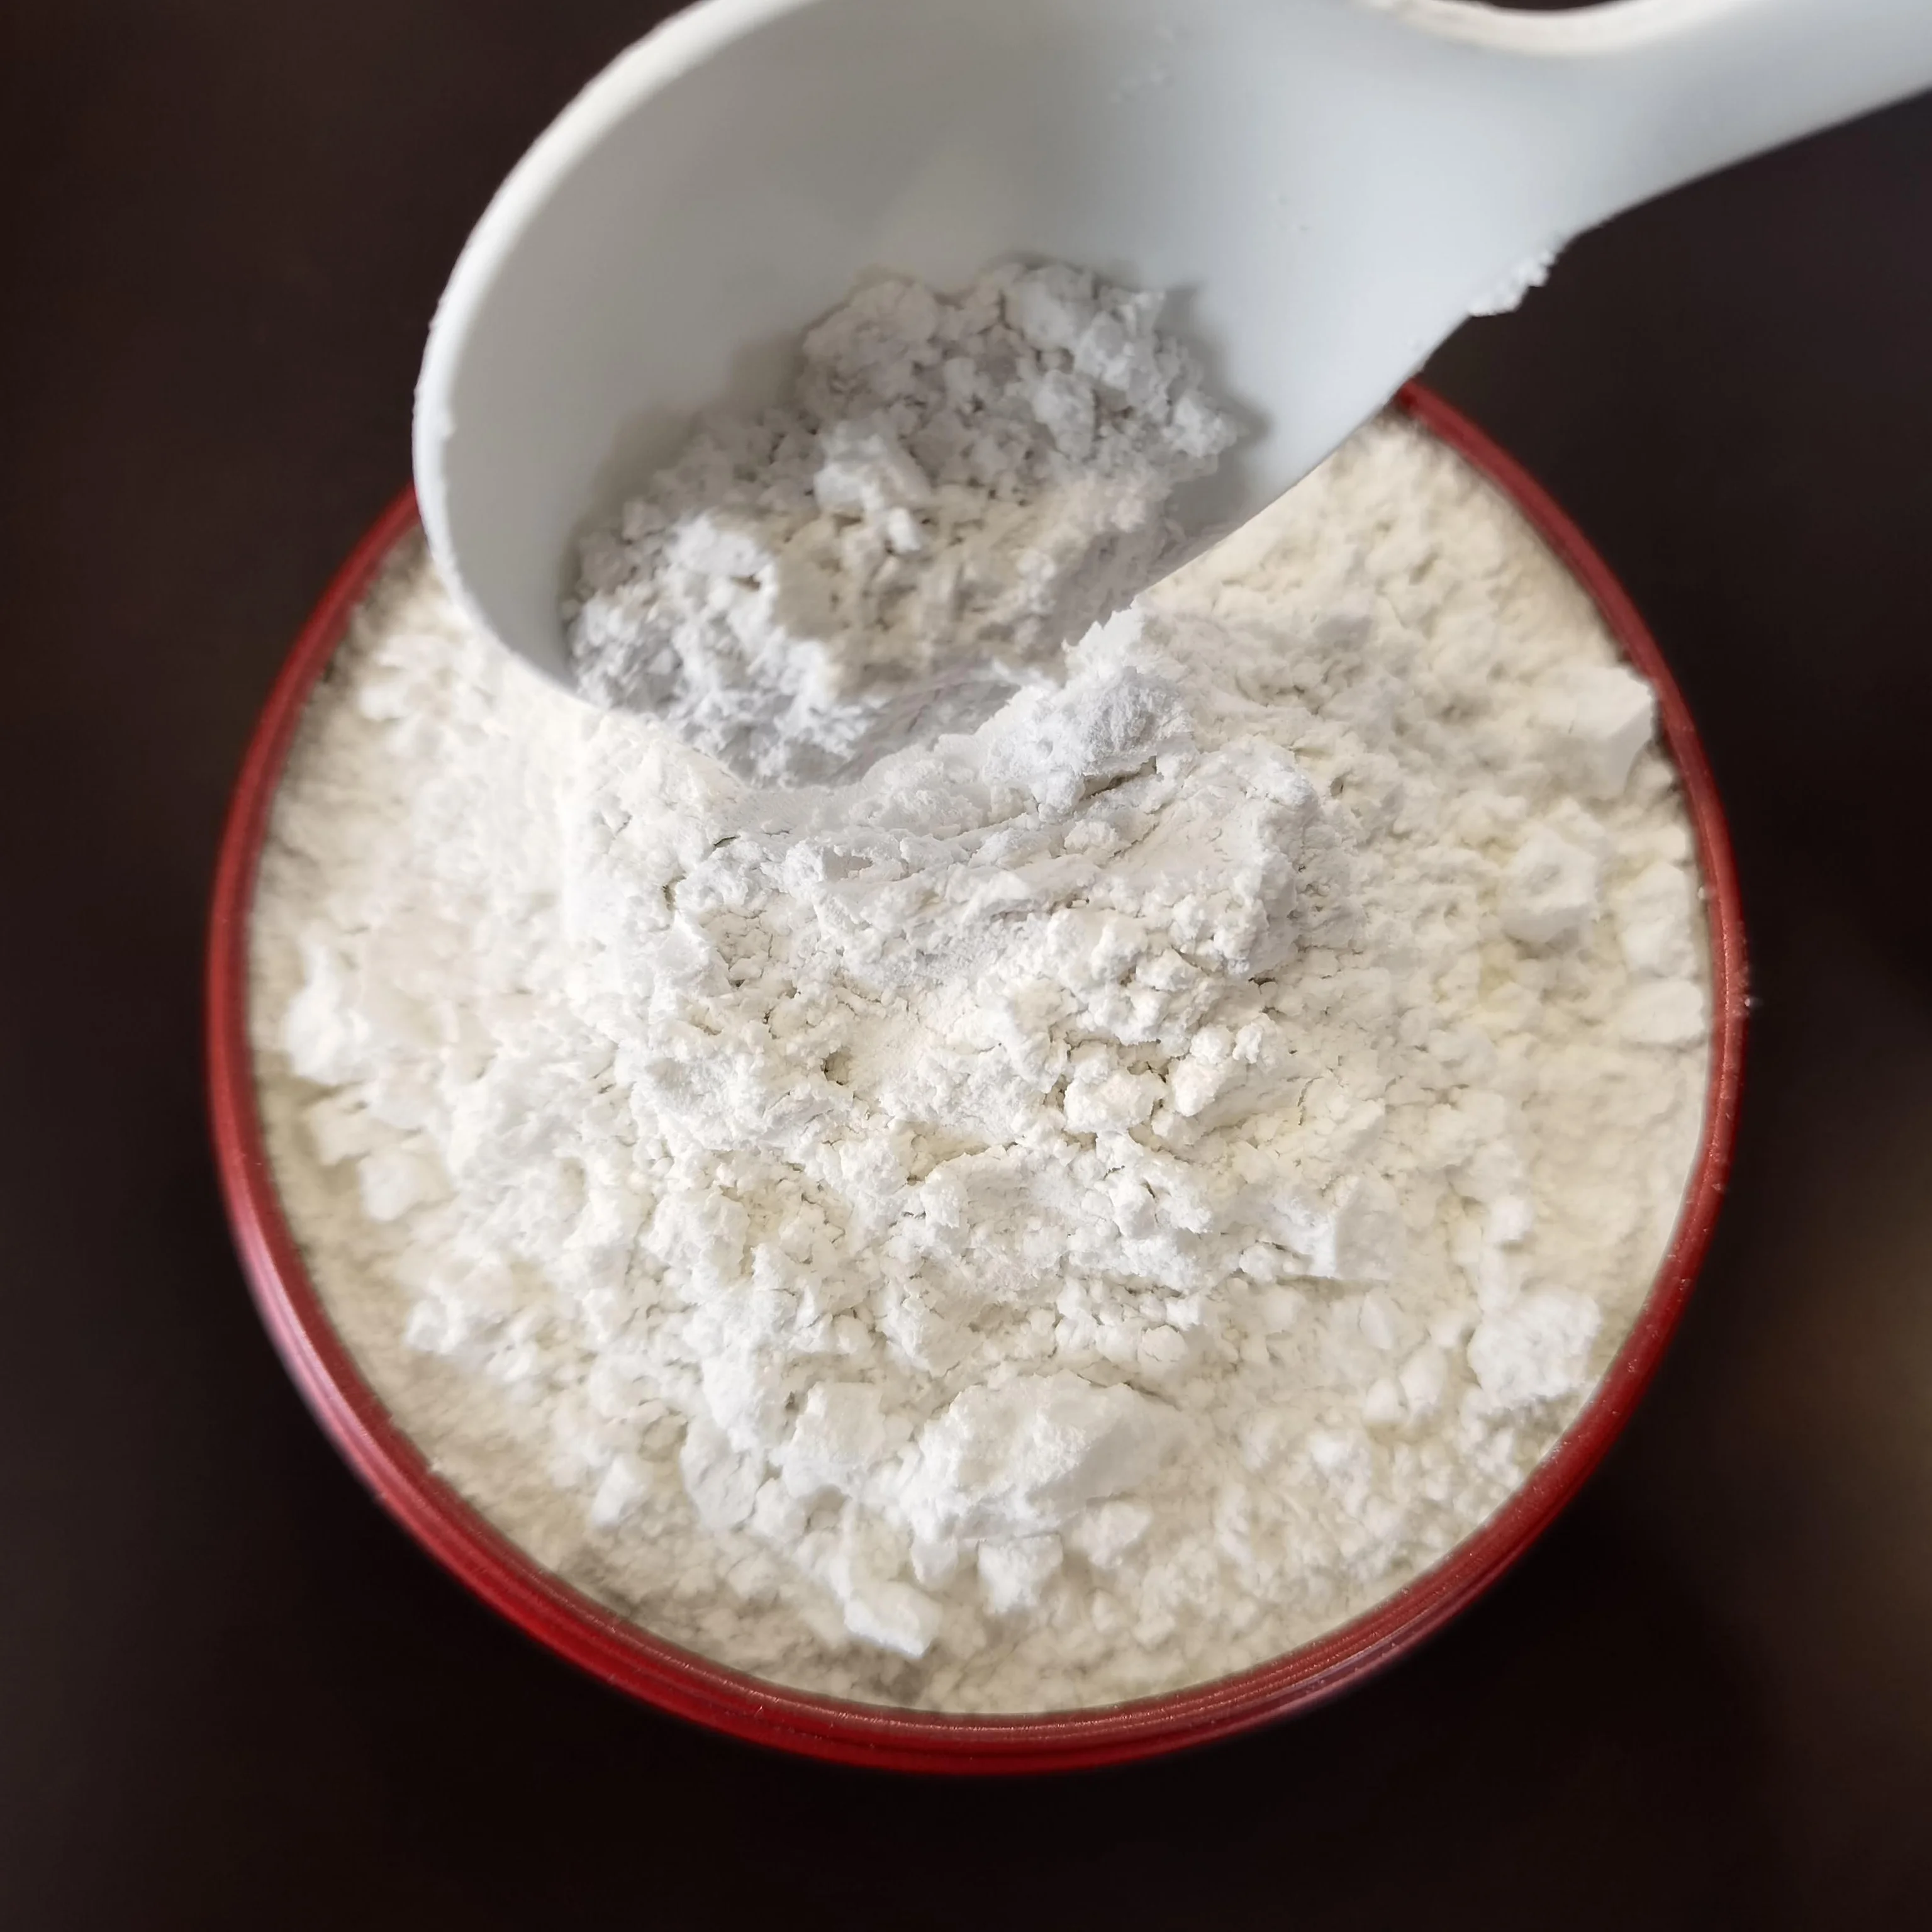 Wholesale Best Grade High Purity Whiteness Ultra Fine Quartz Flour Superfine Silica Powder  400 Mesh For Electronic Materials